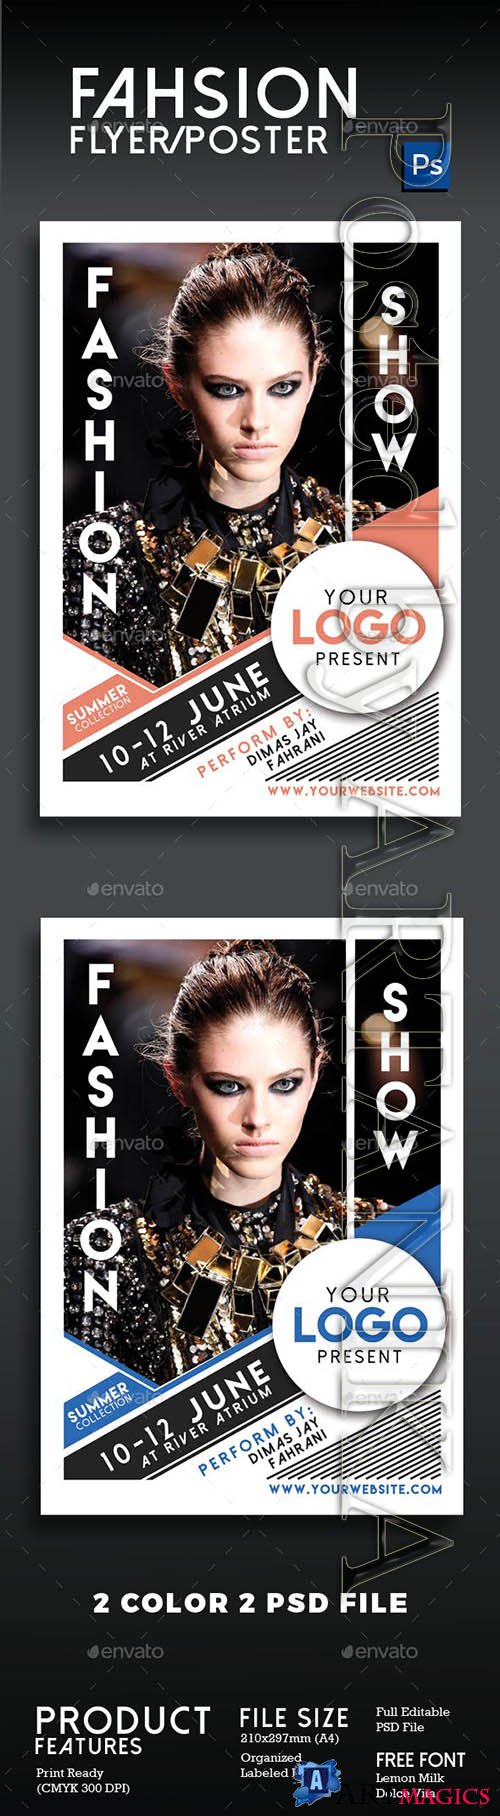 Graphicriver - Fashion Show Flyer Poster Vol 2 16292512